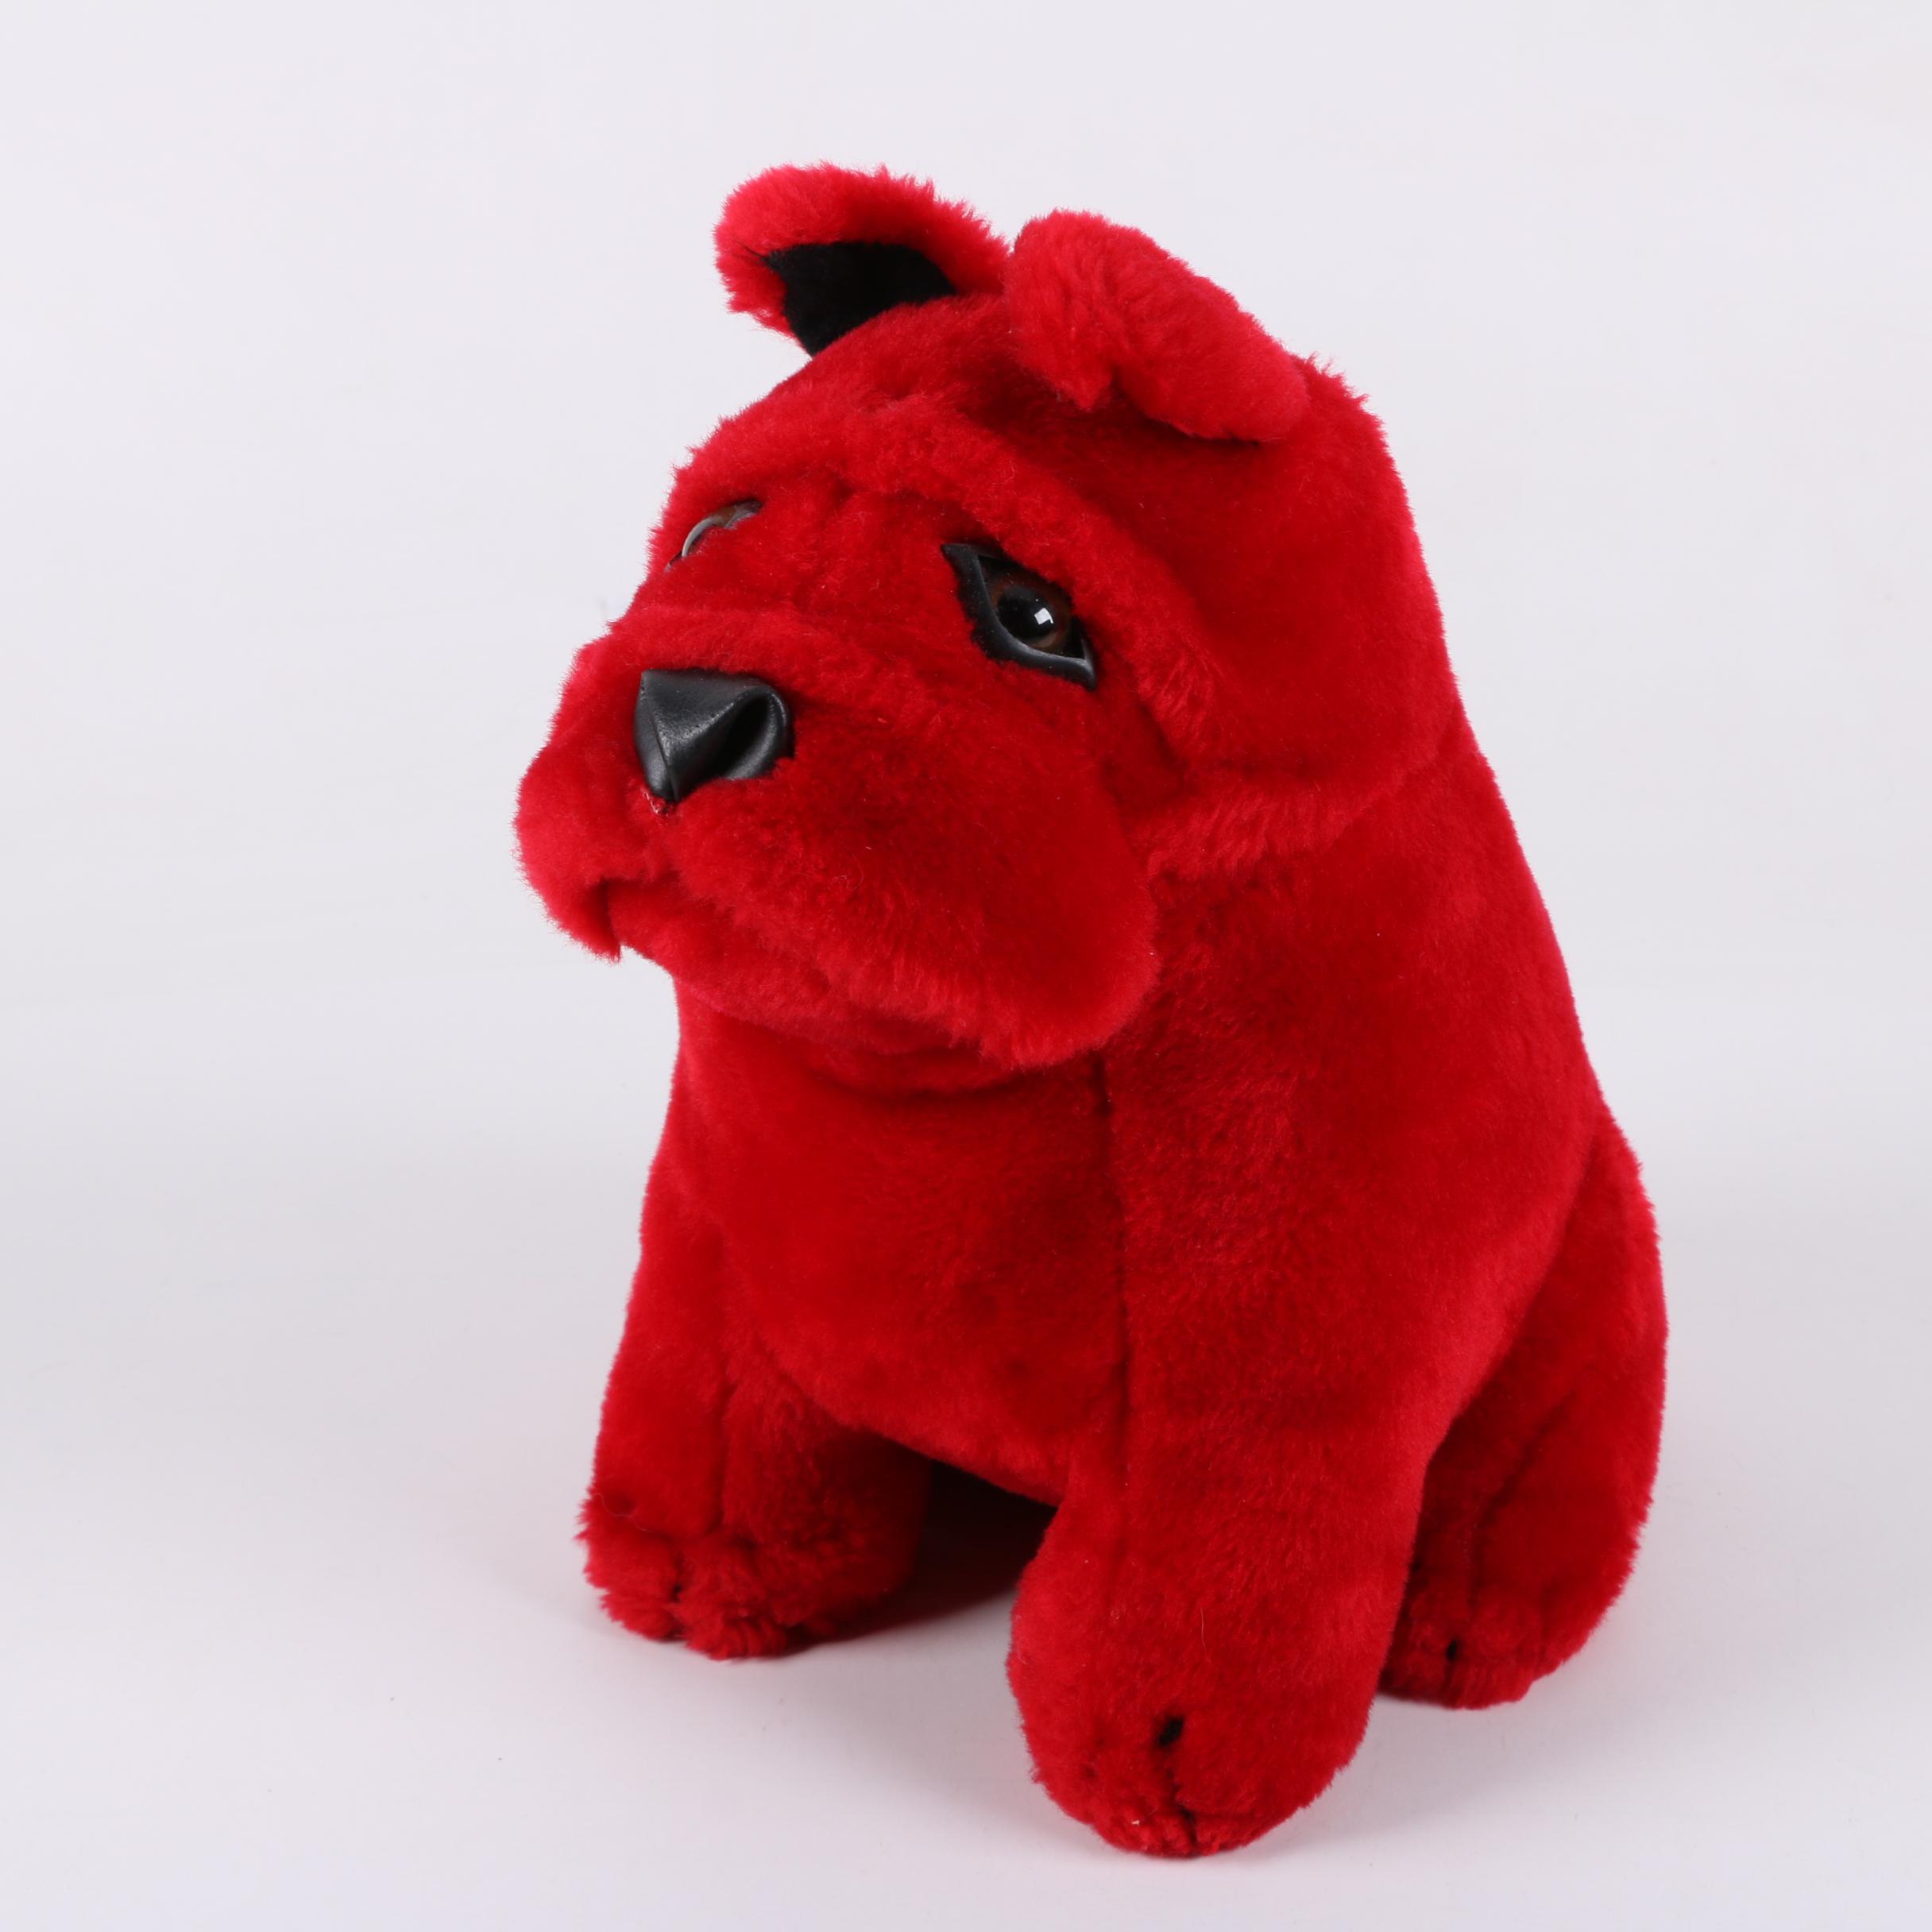 red bulldog stuffed animal